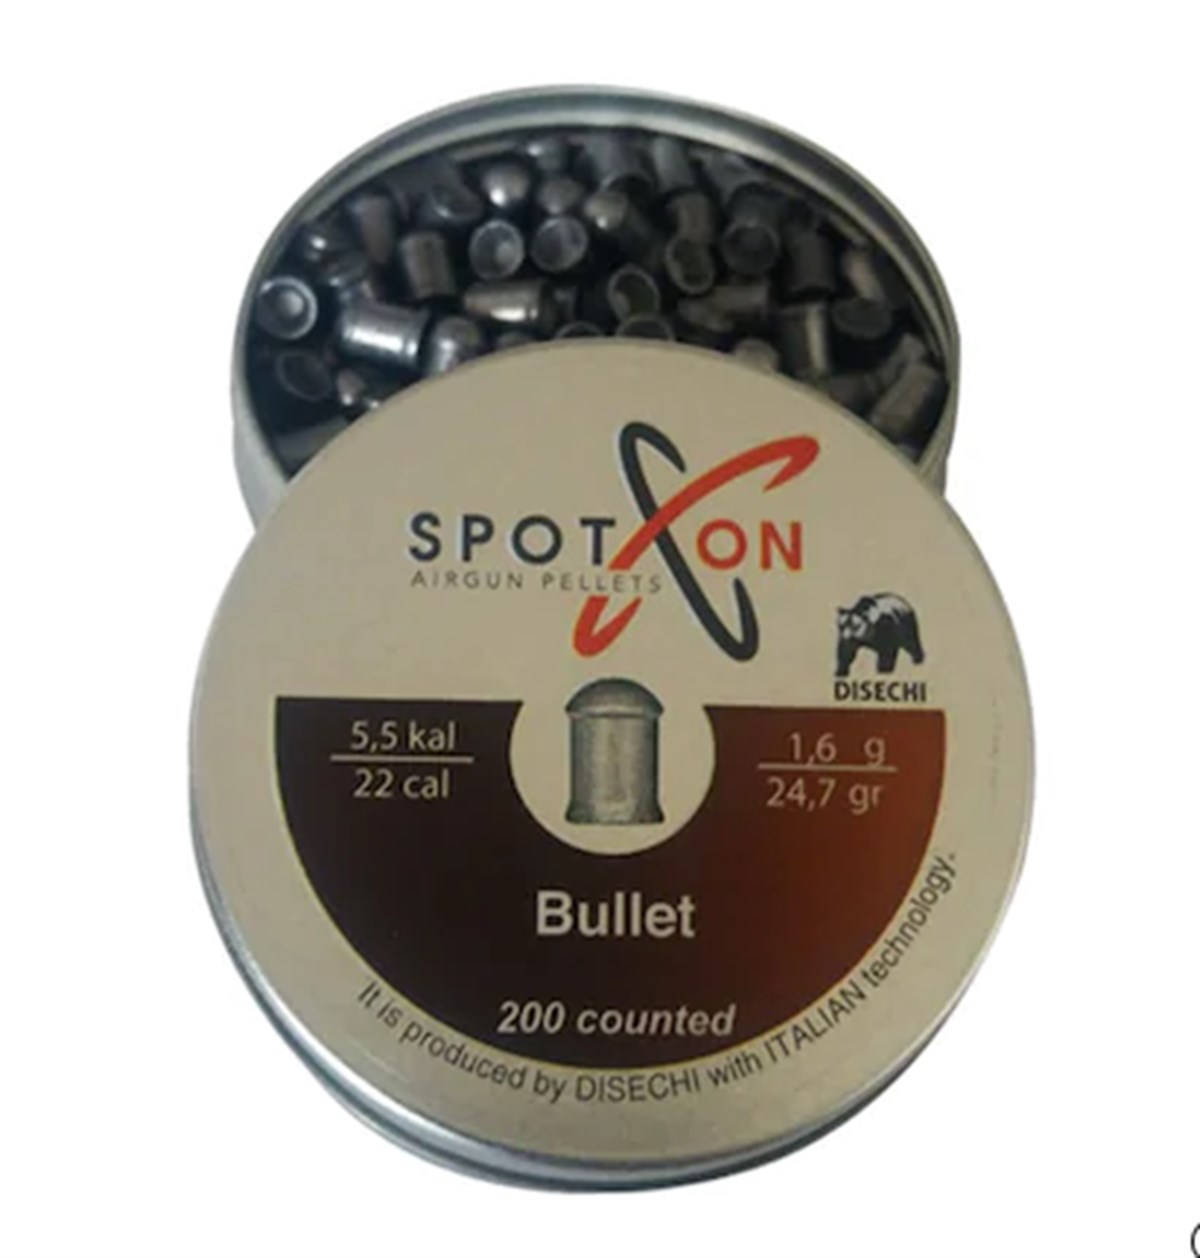 Spoton Blow UP .177 Cal Air Pellets, 4.5mm Airgun pellets